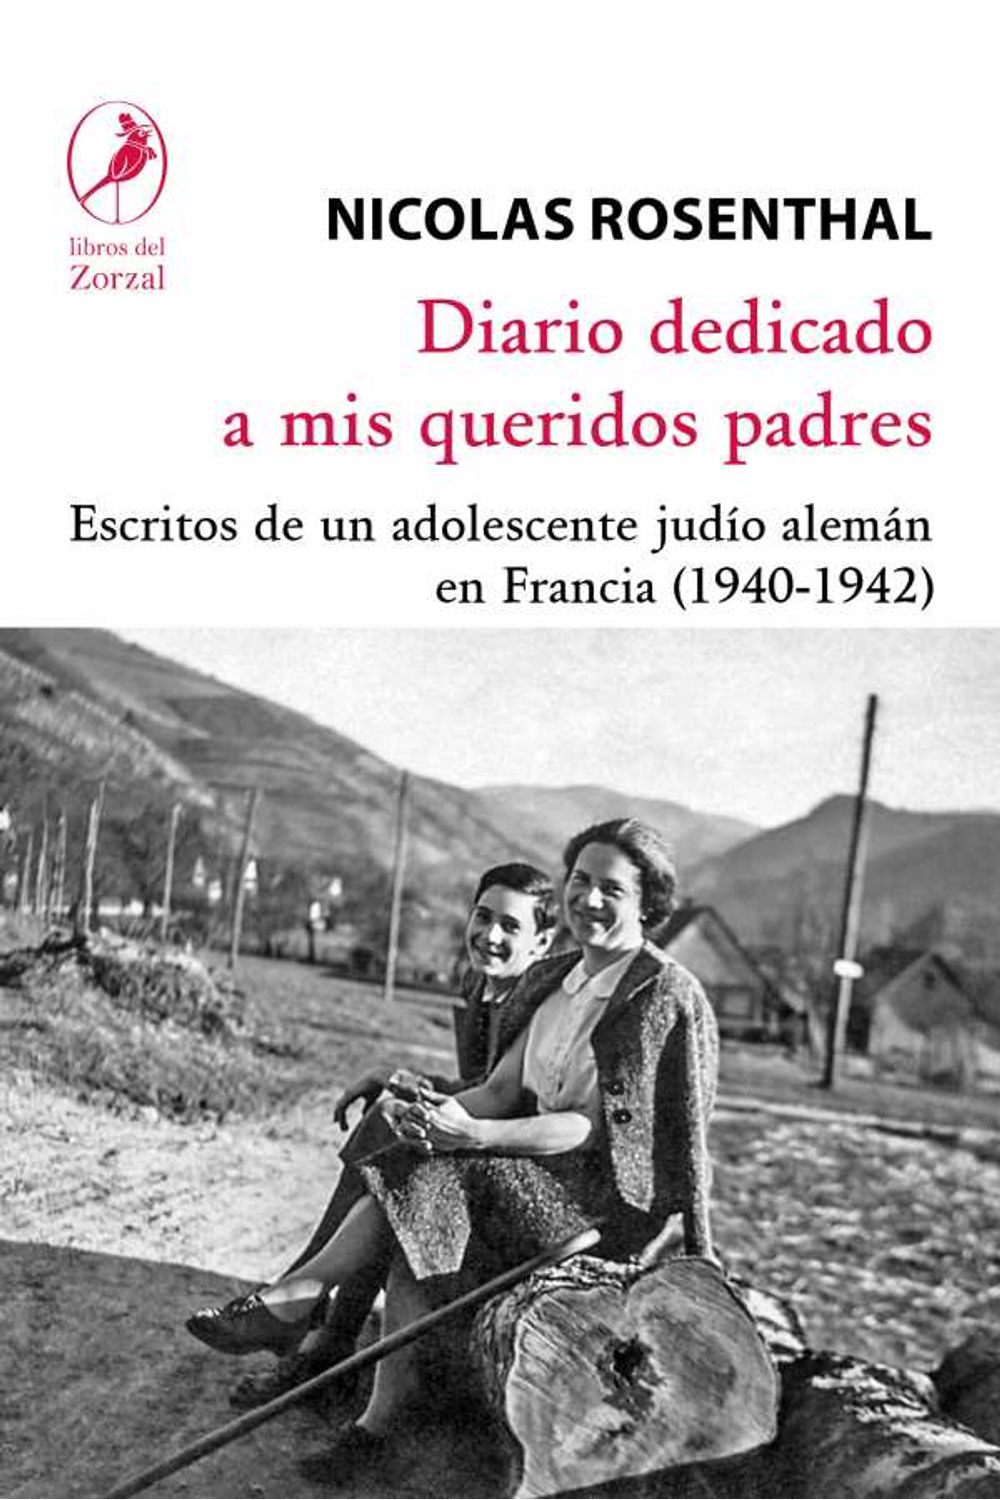 bw-diario-dedicado-a-mis-queridos-padres-libros-del-zorzal-9789875997226